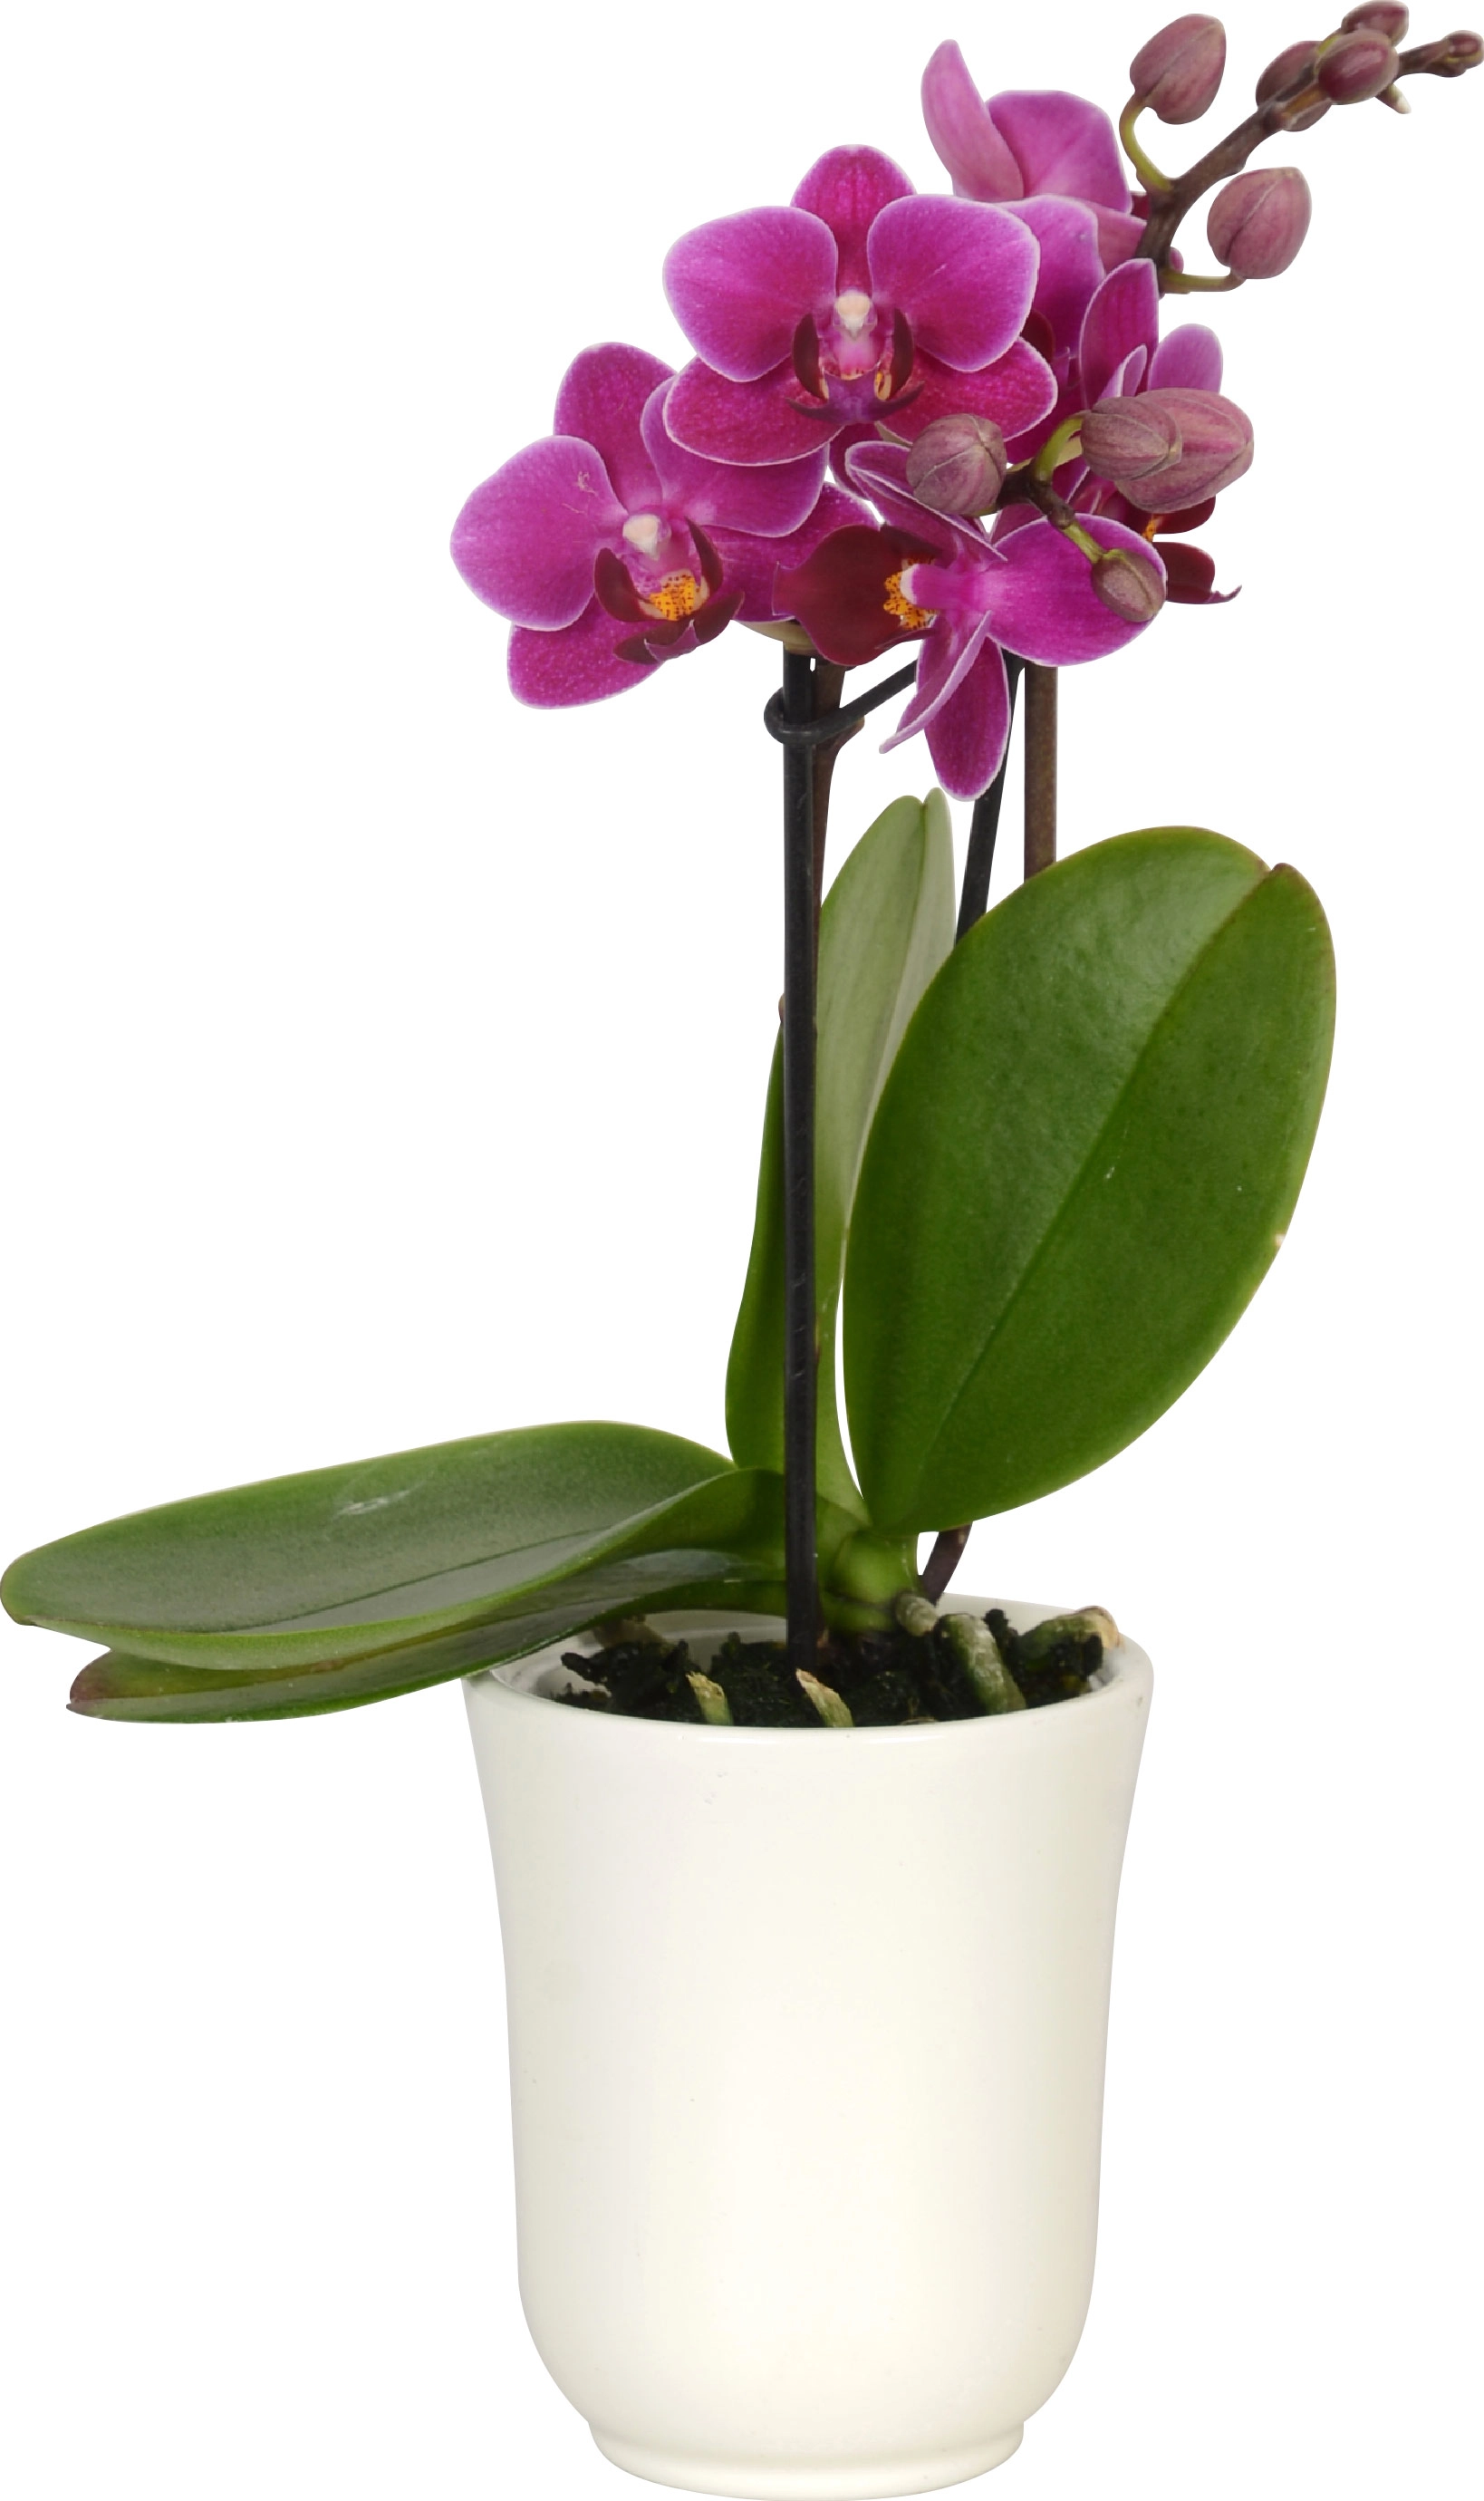 Mini Schmetterlings-Orchidee 2-Trieber bei Topf-Ø cm 6 Keramik OBI kaufen in